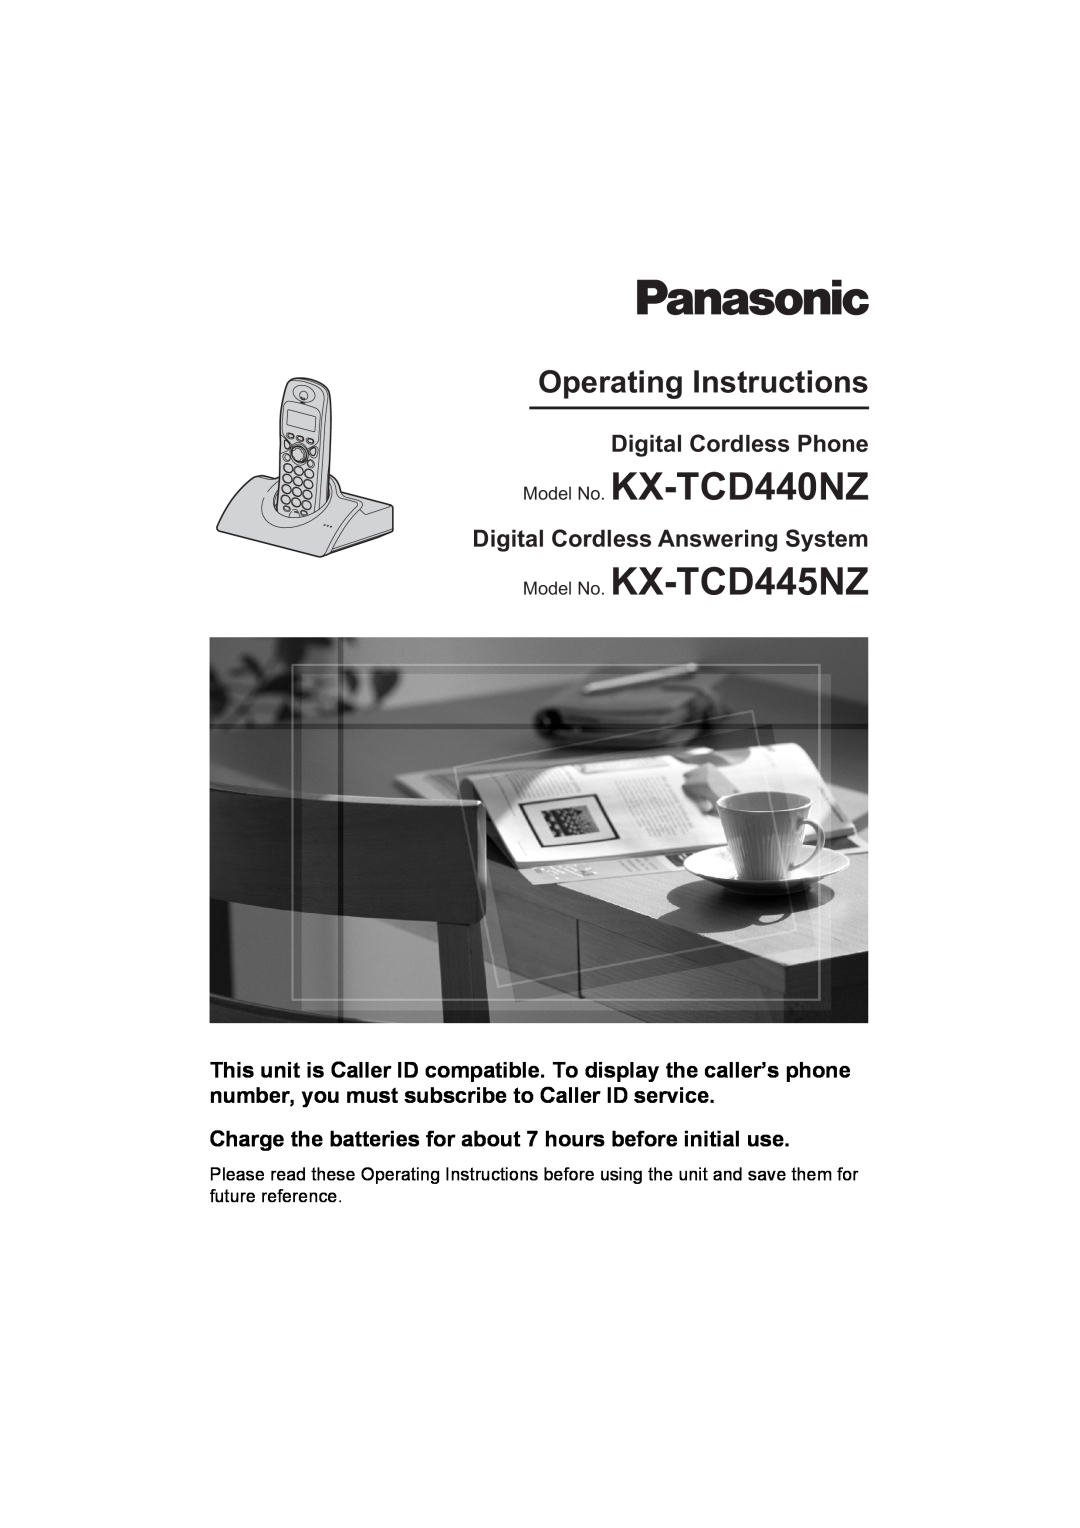 Panasonic KX-TCD440NZ operating instructions Digital Cordless Phone, Digital Cordless Answering System 